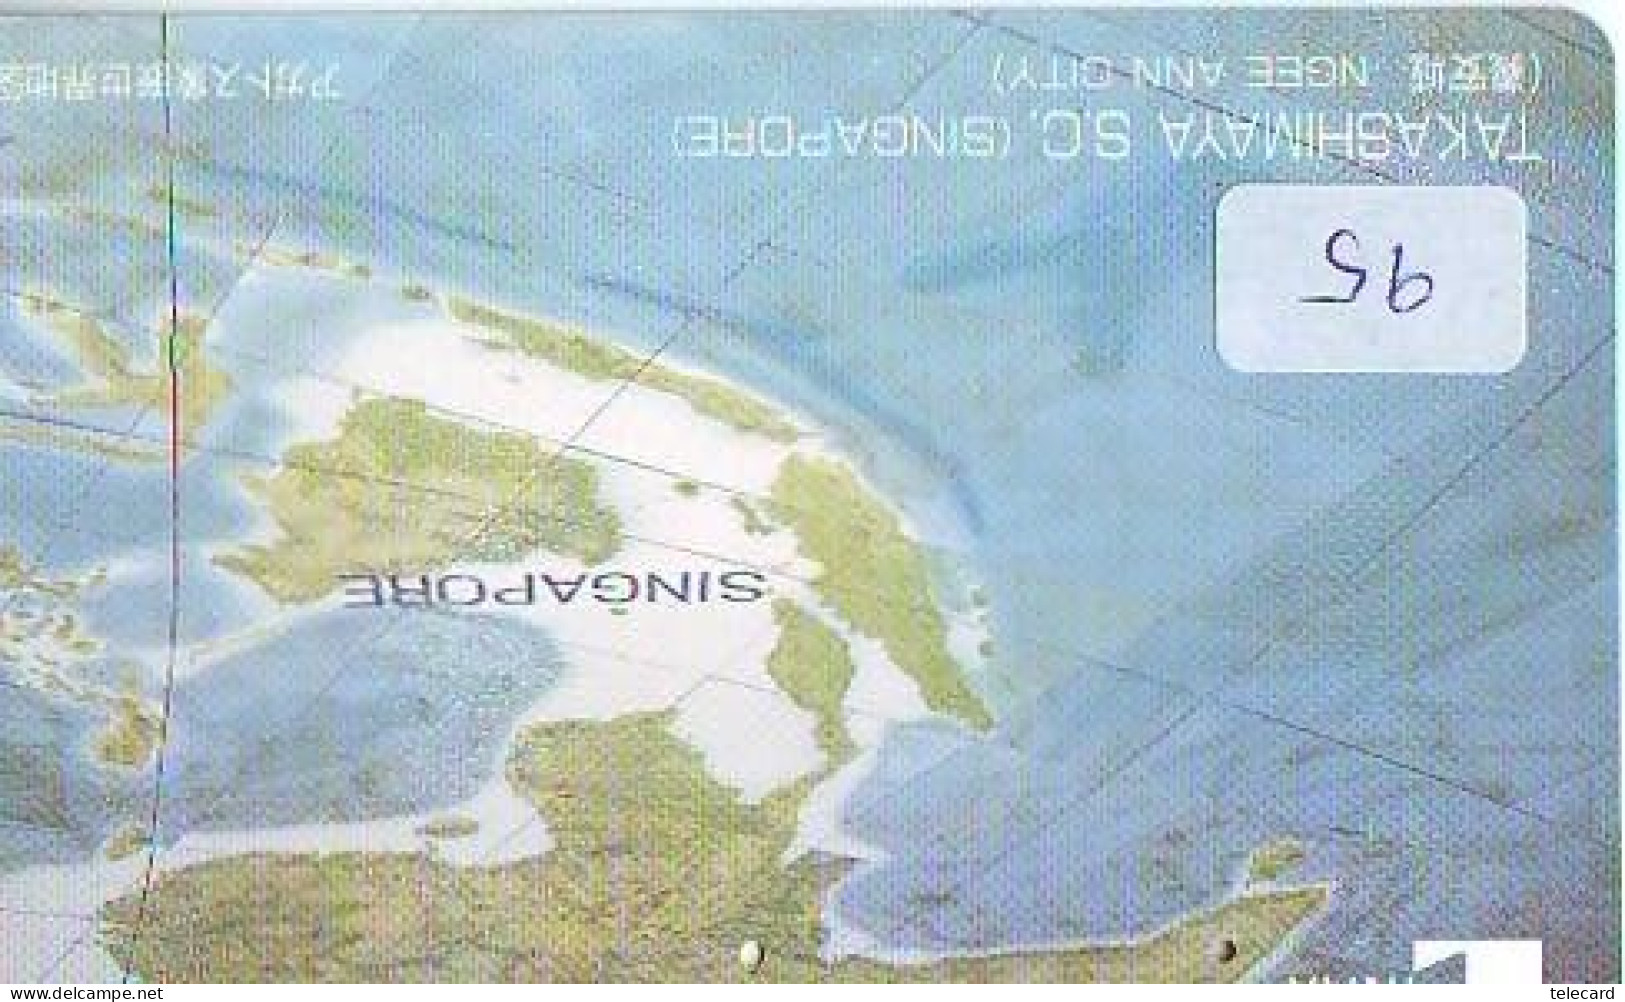 Telecarte SINGAPORE Reliée (95) - Telefonkarte SINGAPORE Verbunden - Phonecard SINGAPORE Related - Japan - Landschaften